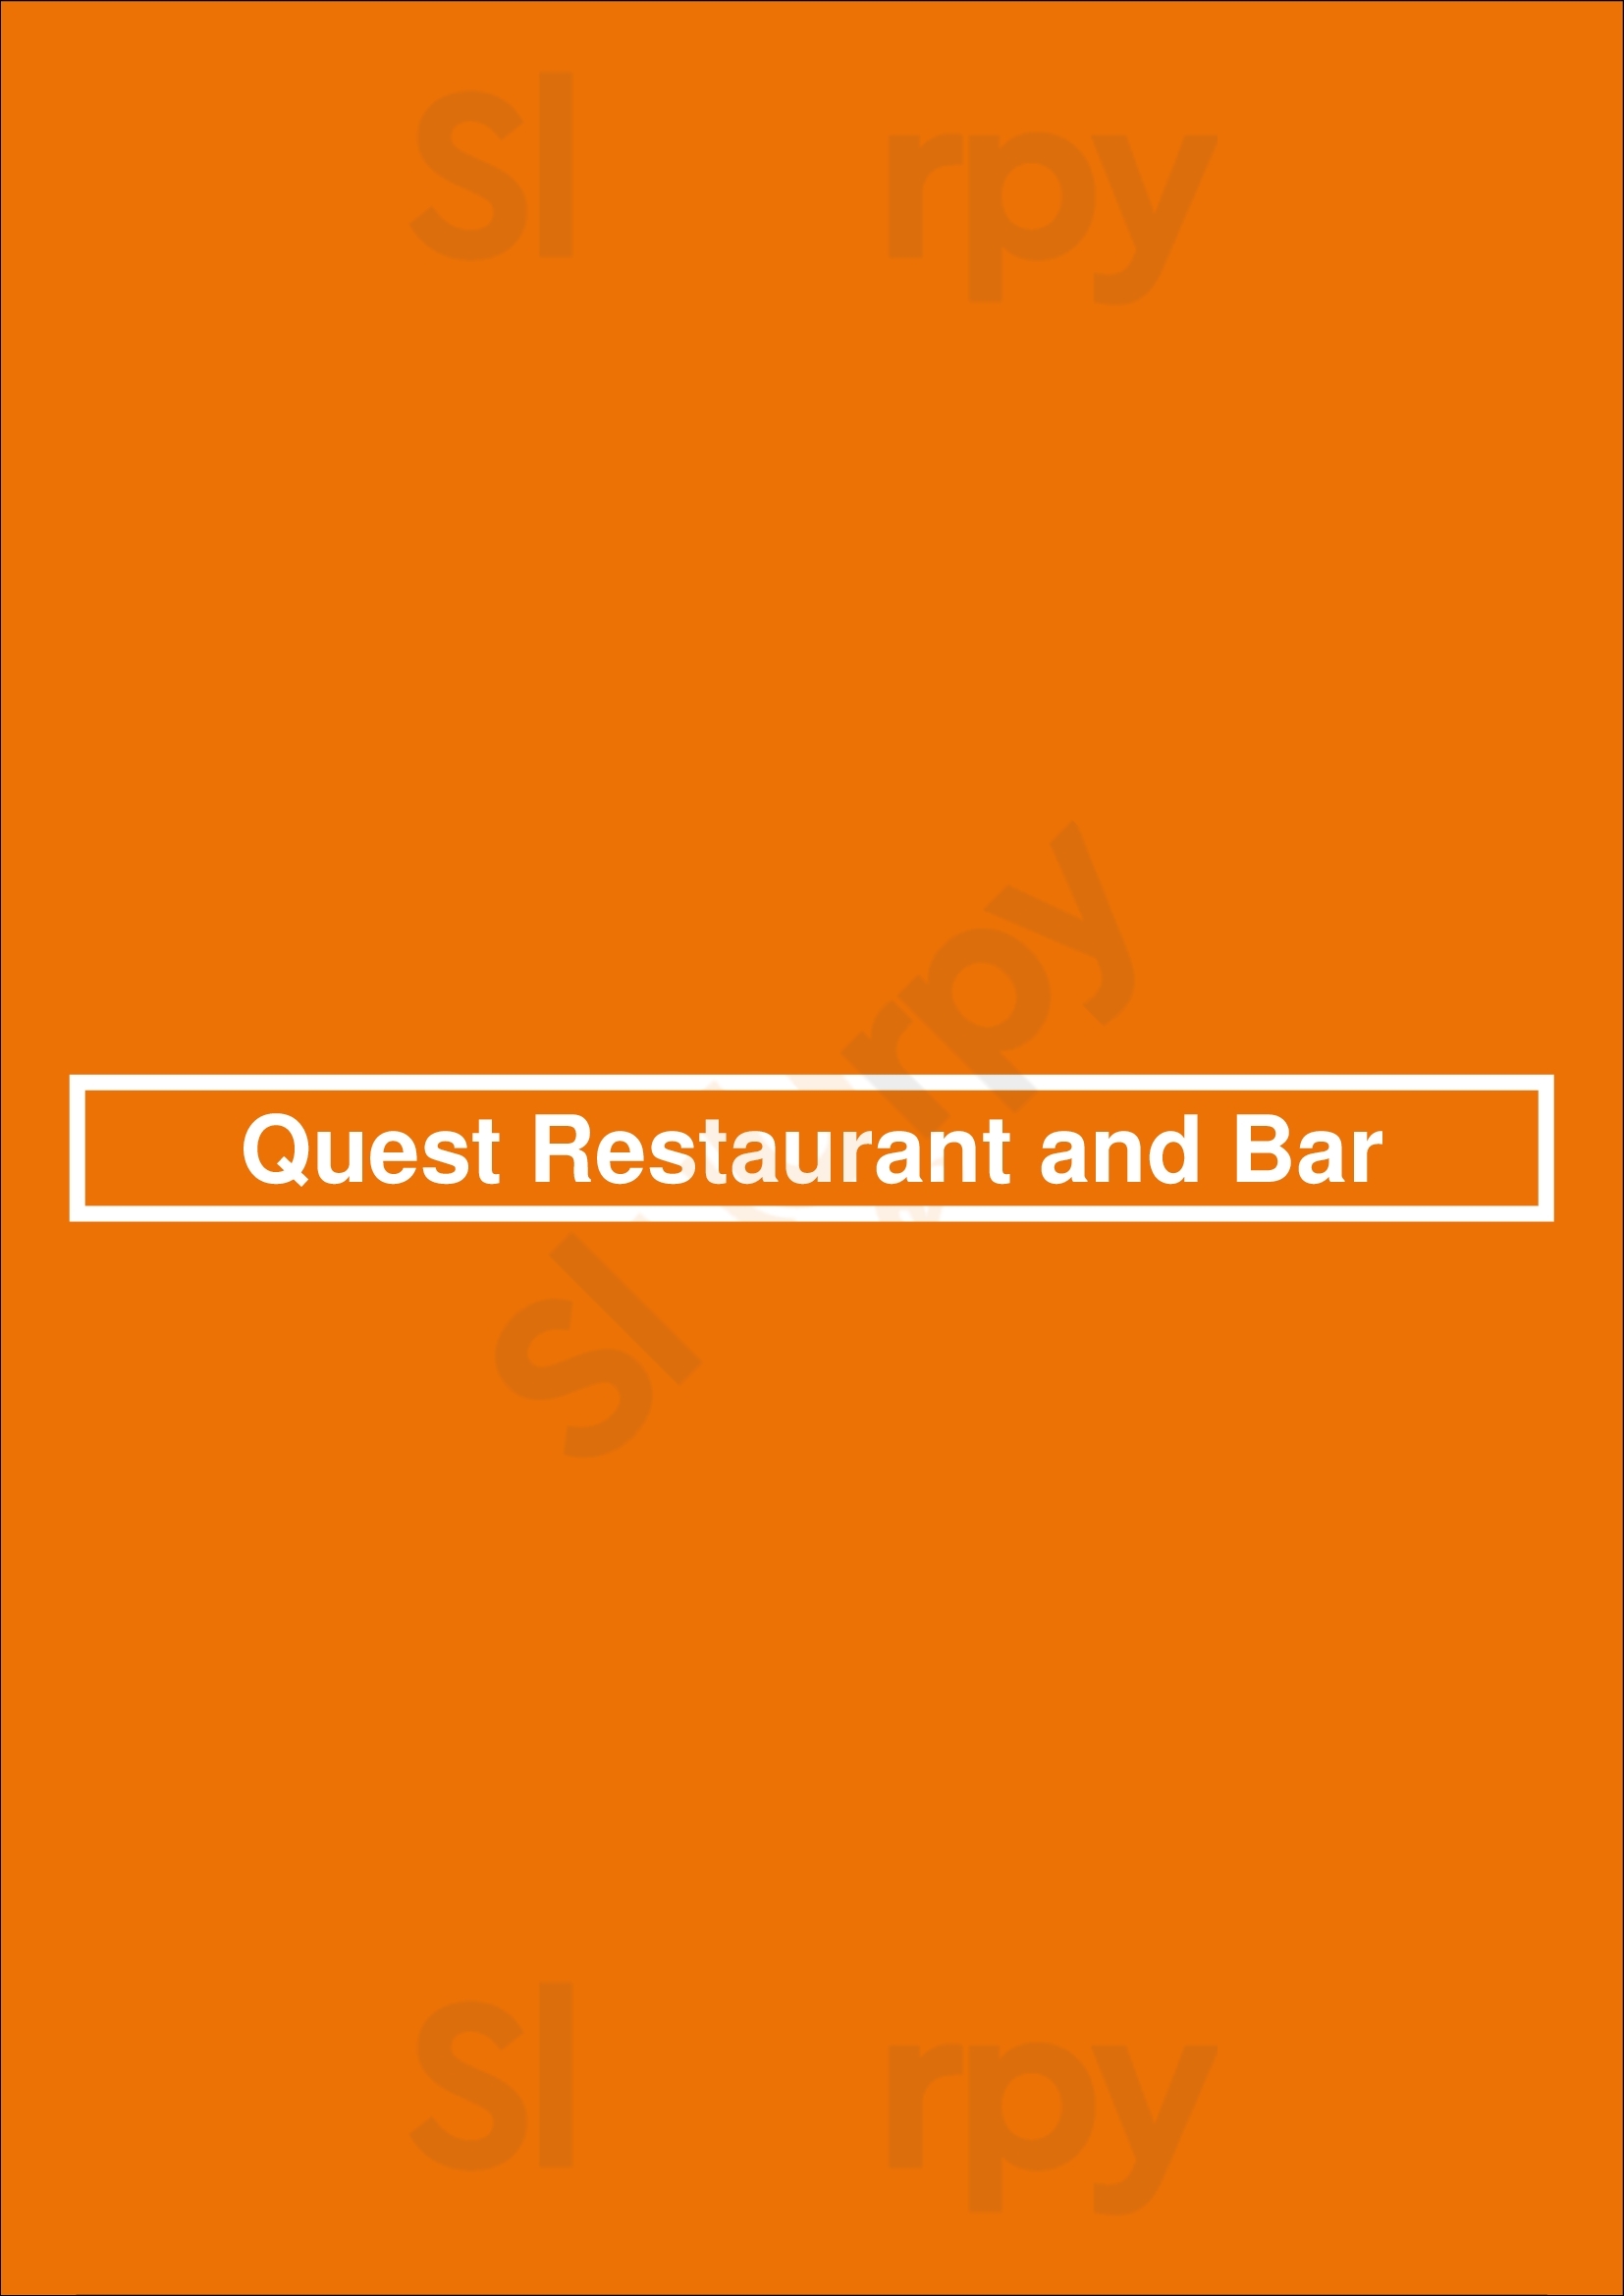 Quest Restaurant And Bar Mississauga Menu - 1